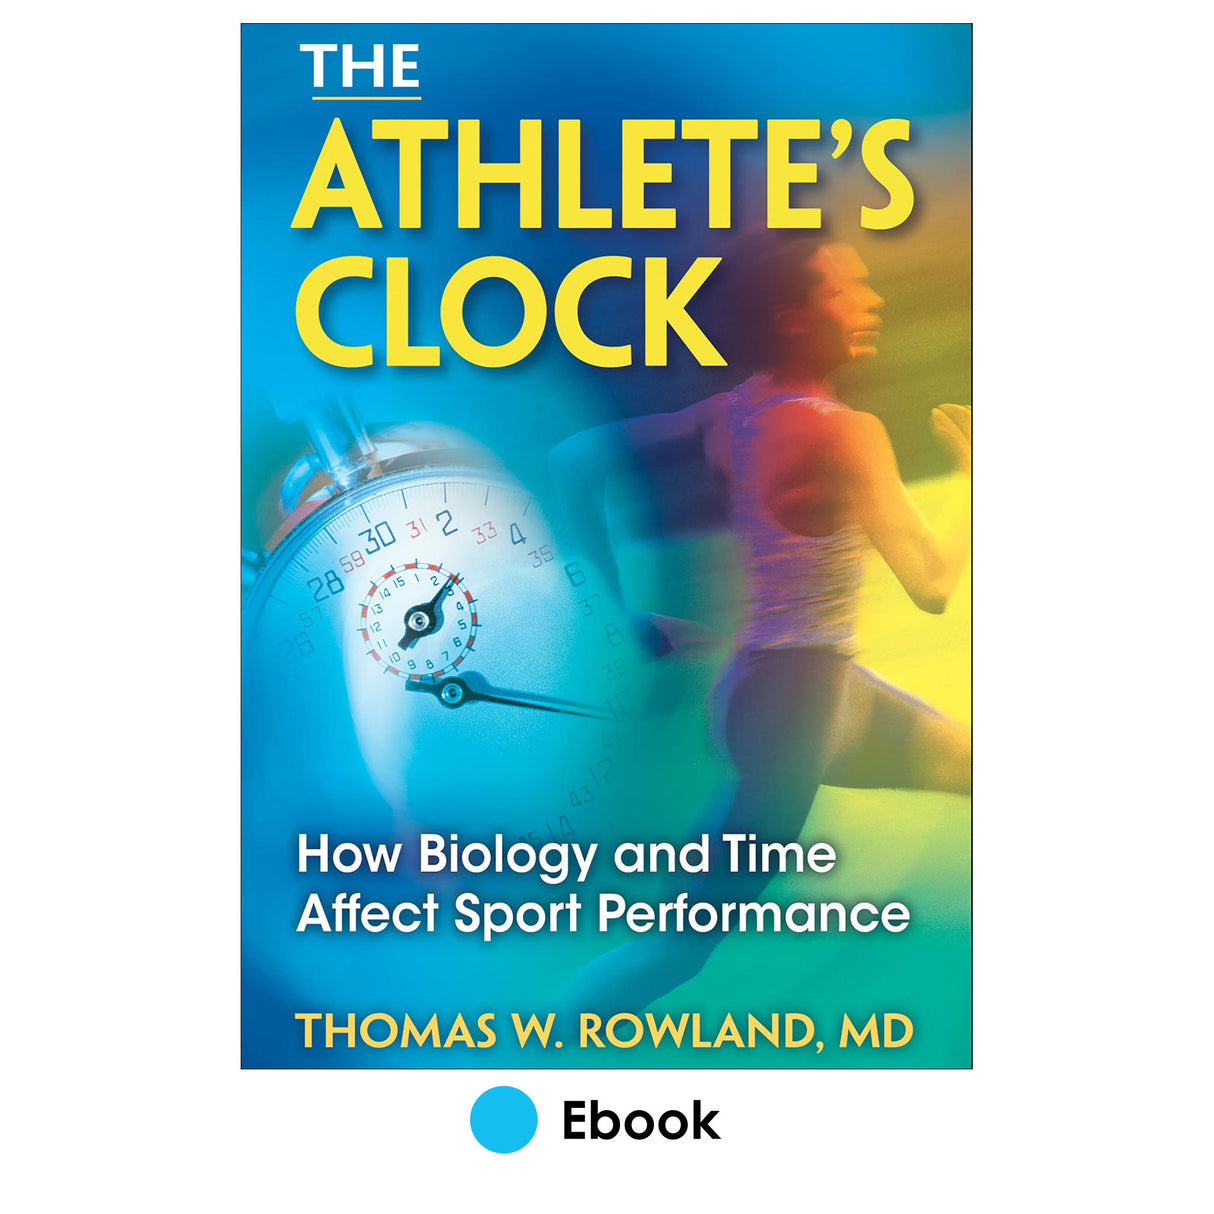 Athlete's Clock PDF, The